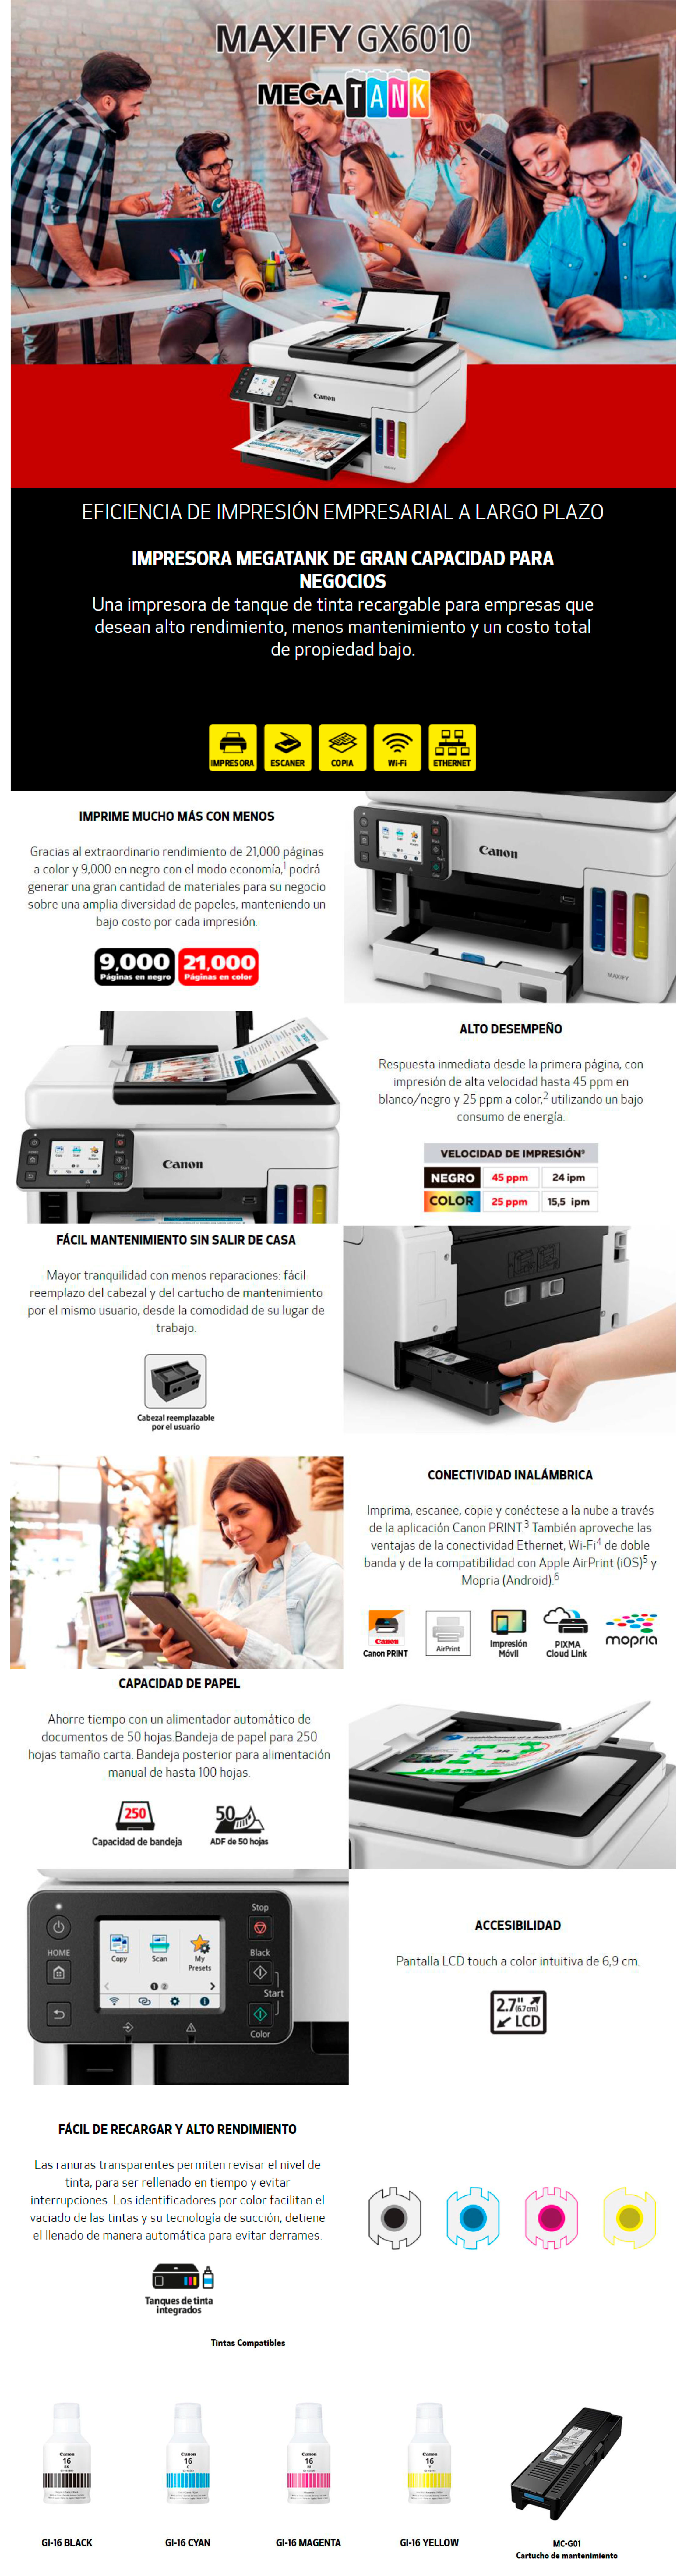 Impresora Multifuncional CANON Maxify GX6010, Tecnología Tinta Continua.  Impresora, Copiadora, Escáner. Pantalla Táctil en Color de 2.7 Pulgadas  4470C004AA